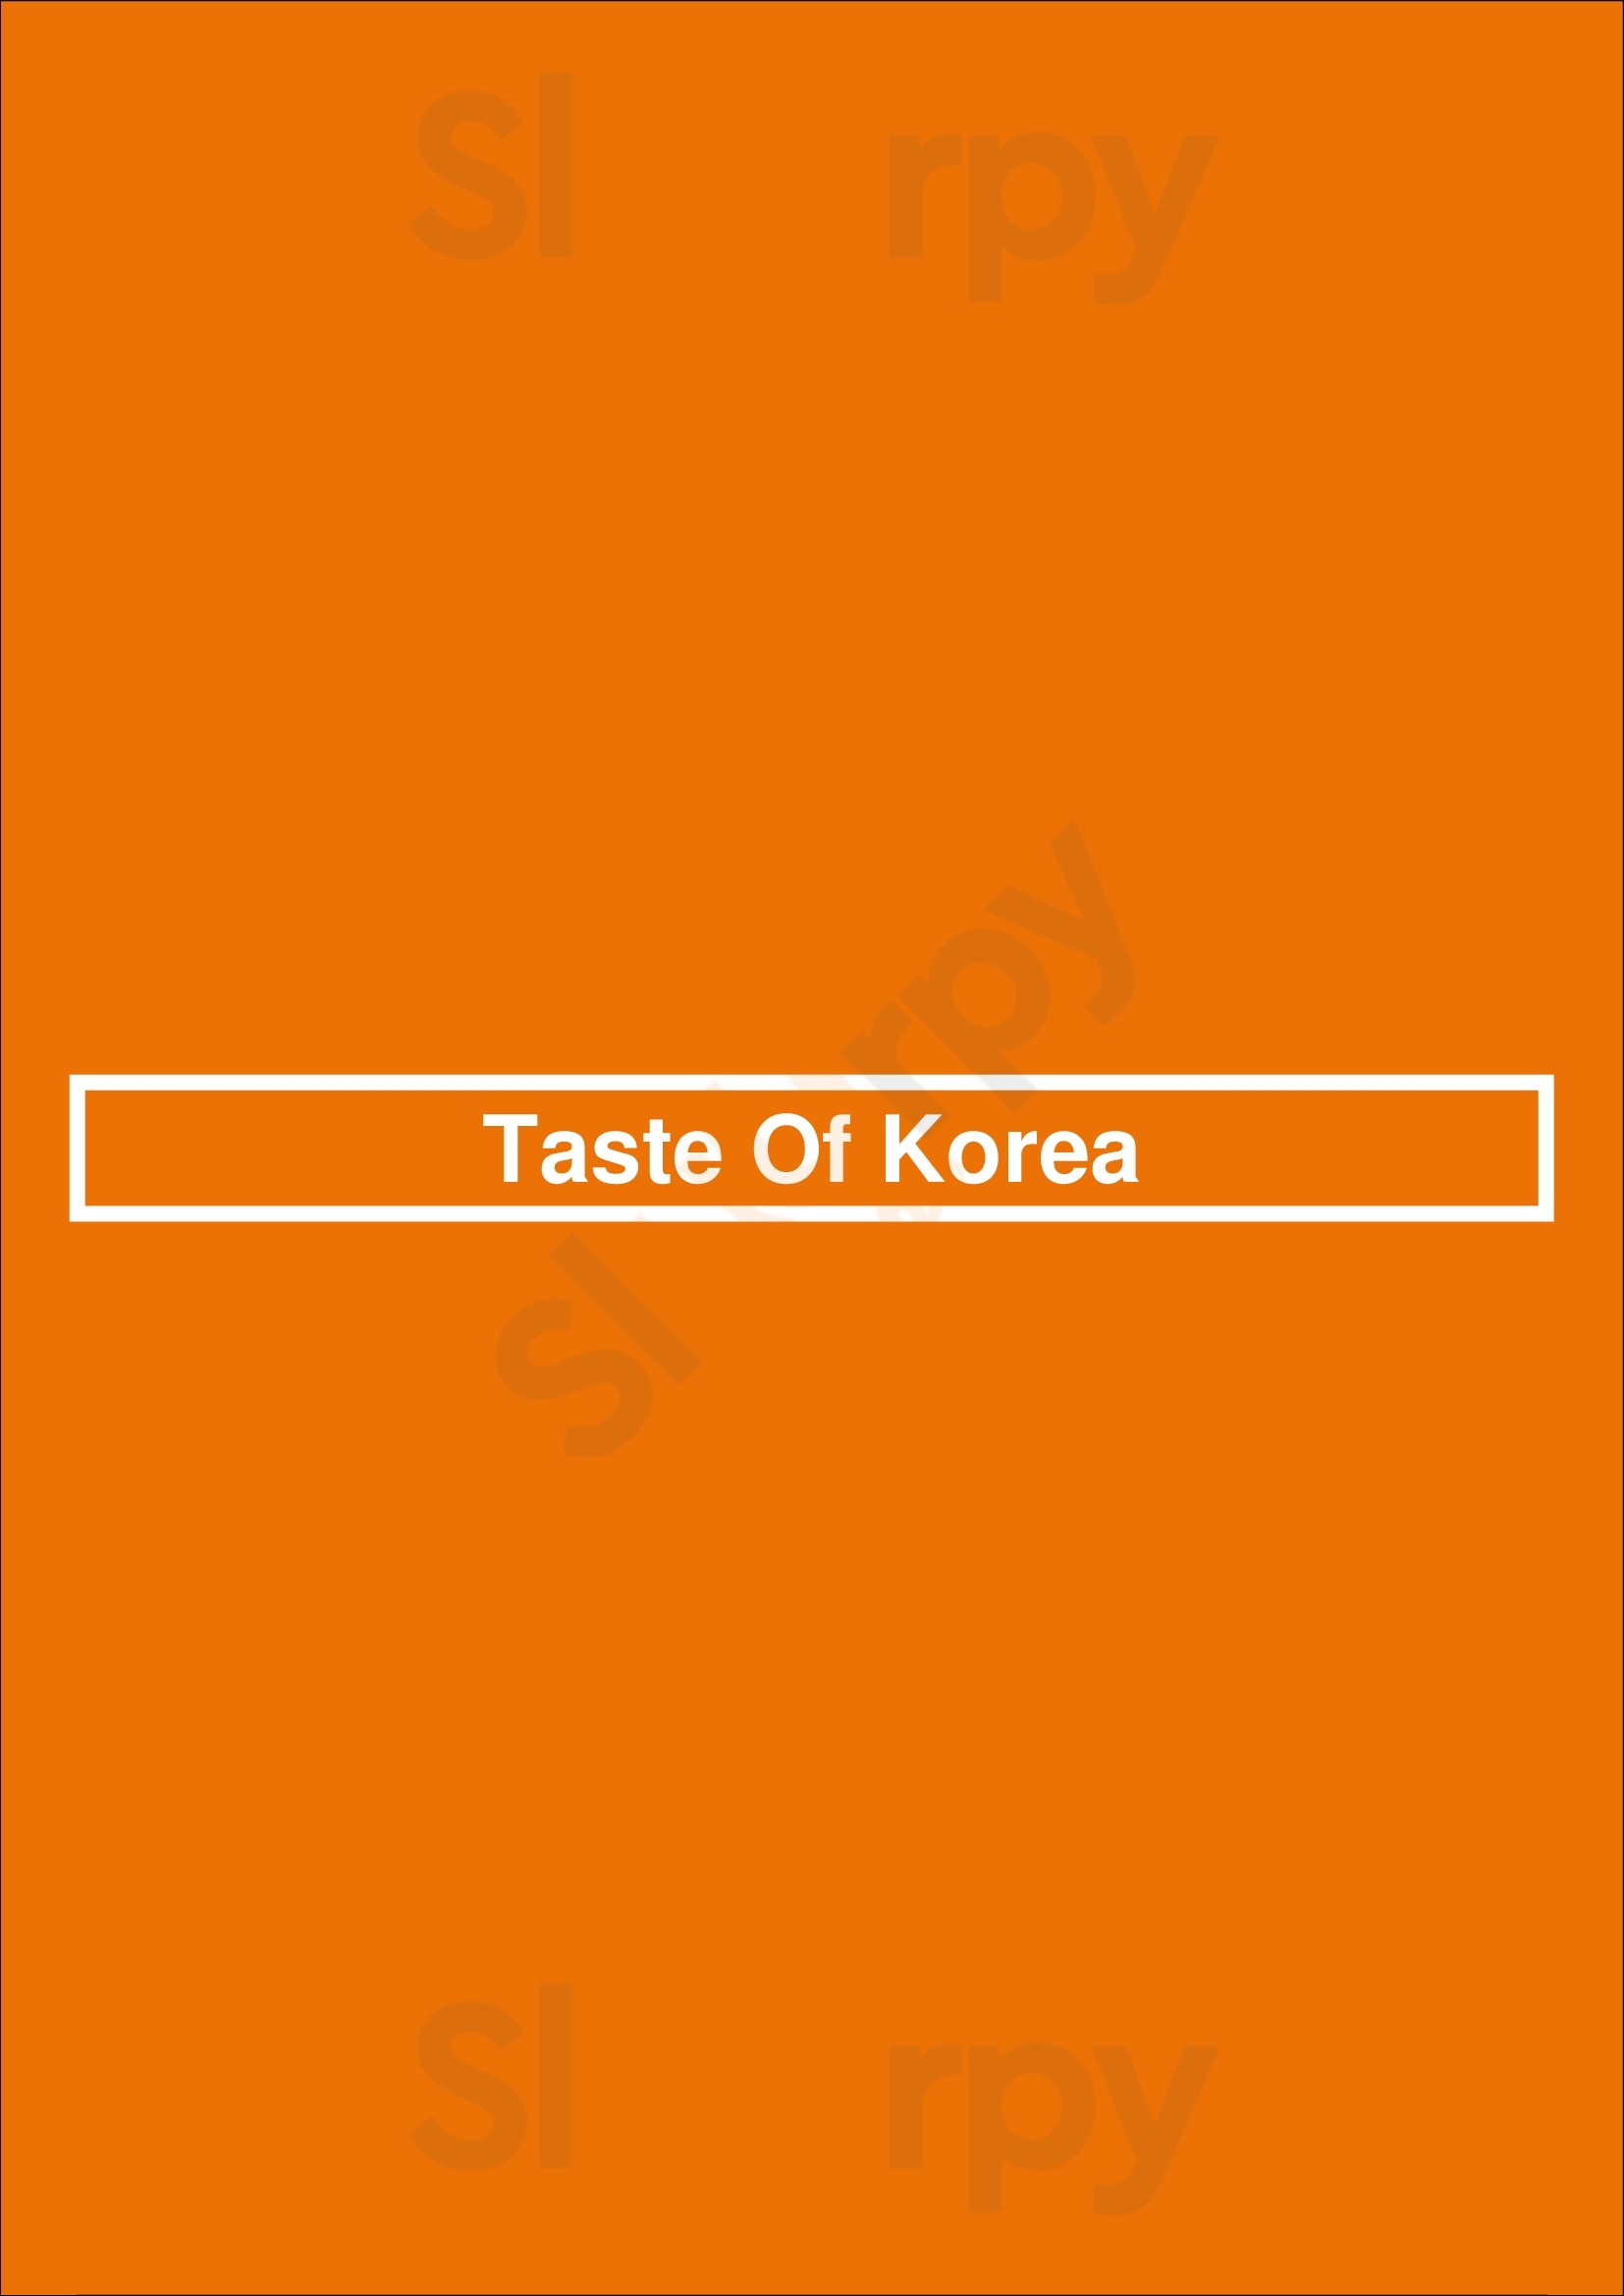 Taste Of Korea Calgary Menu - 1